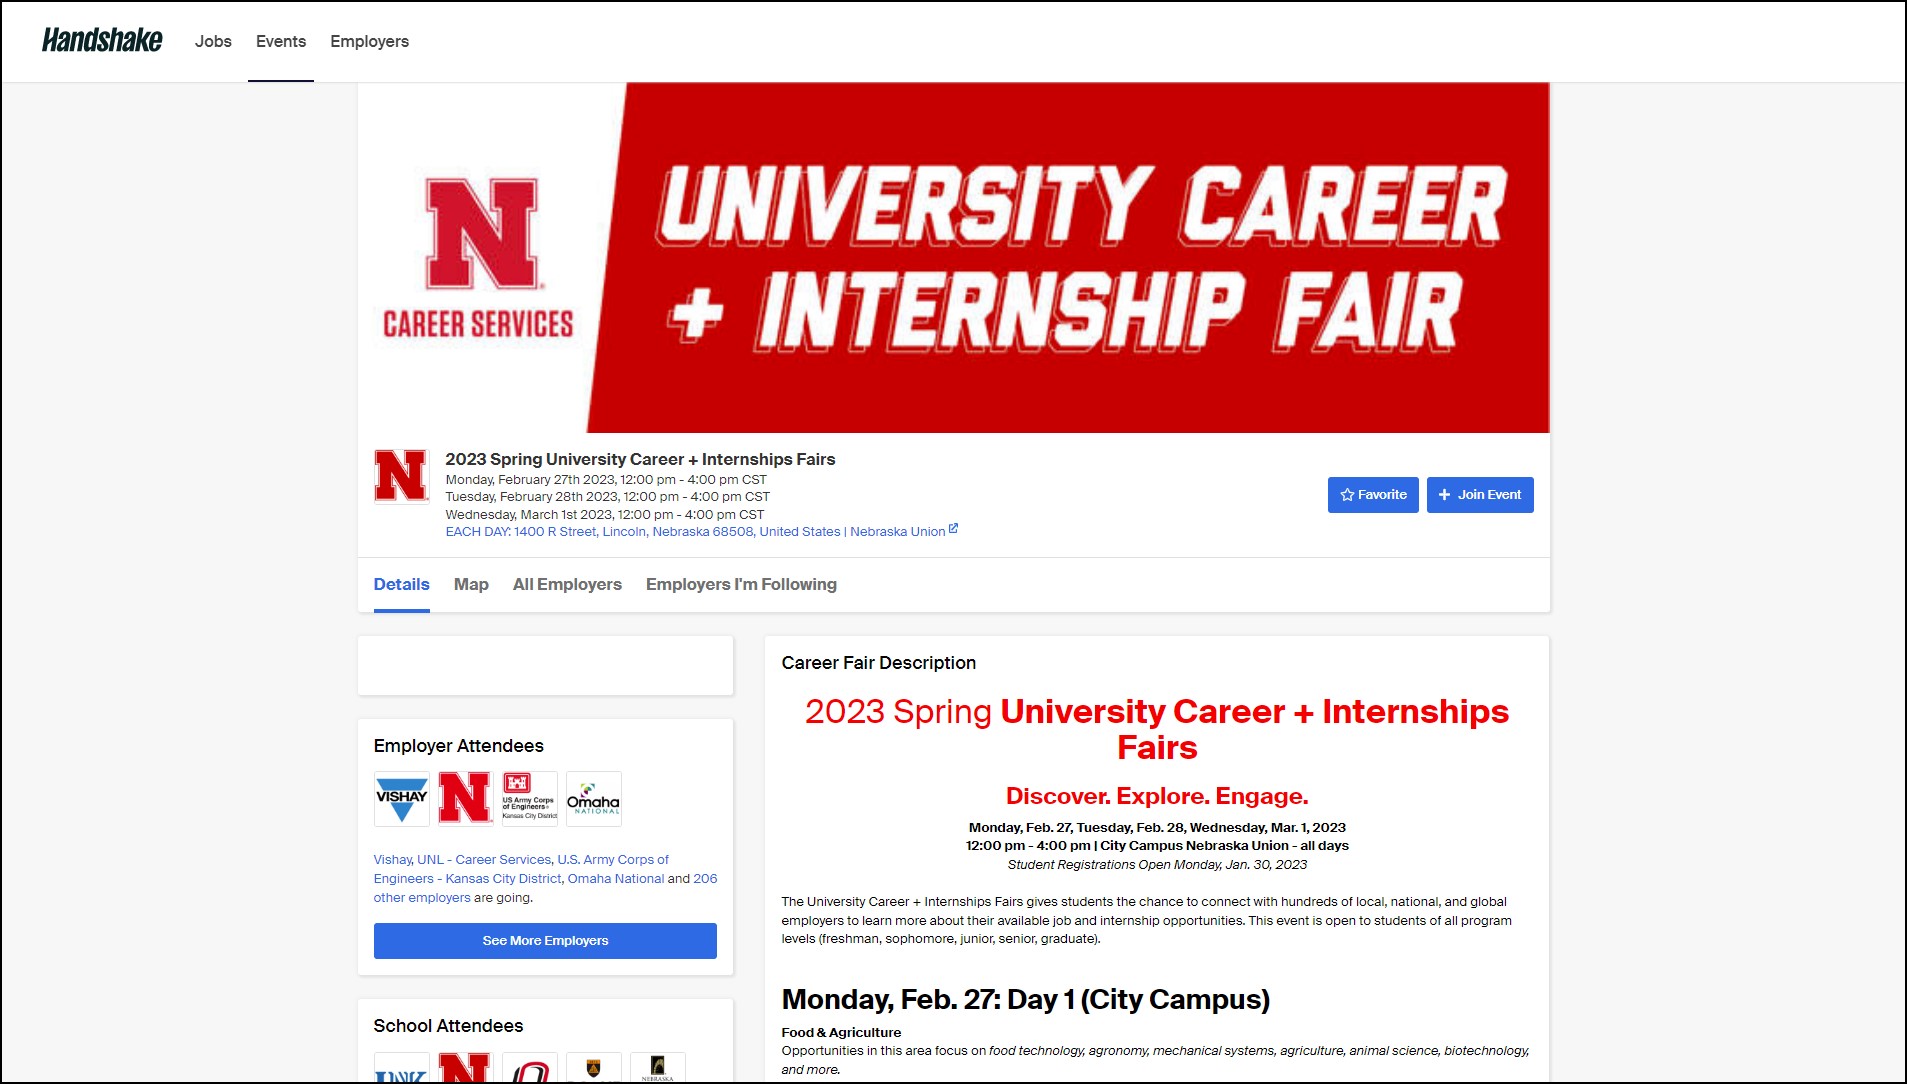 2023 Spring University Career + Internships Fairs